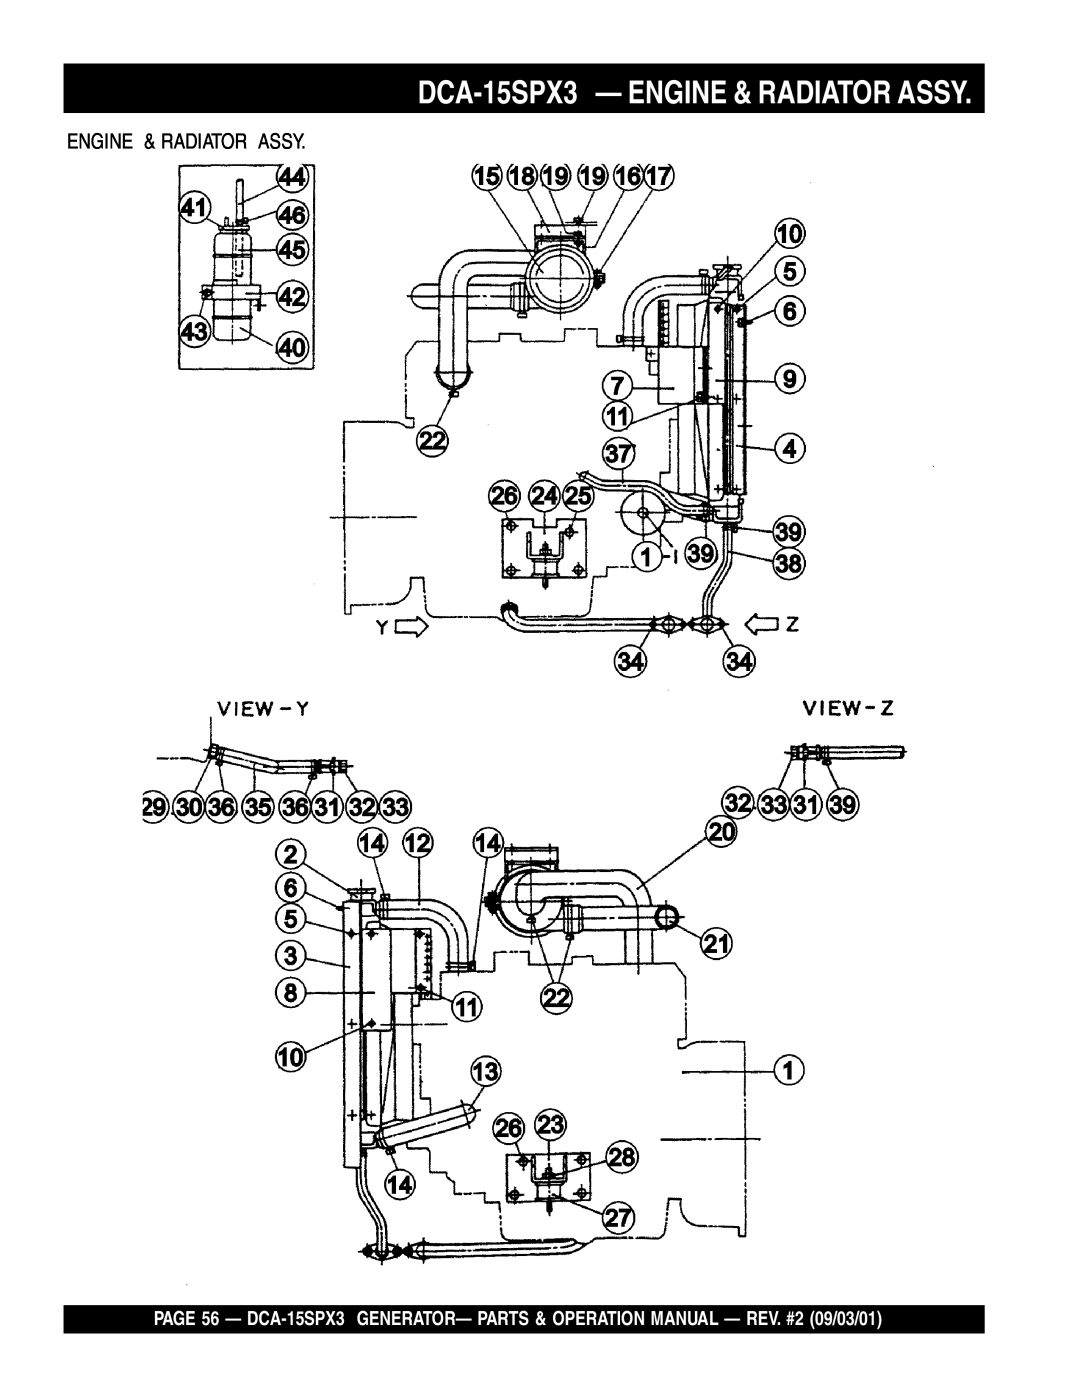 Multiquip operation manual DCA-15SPX3— ENGINE & RADIATOR ASSY, Engine & Radiator Assy 